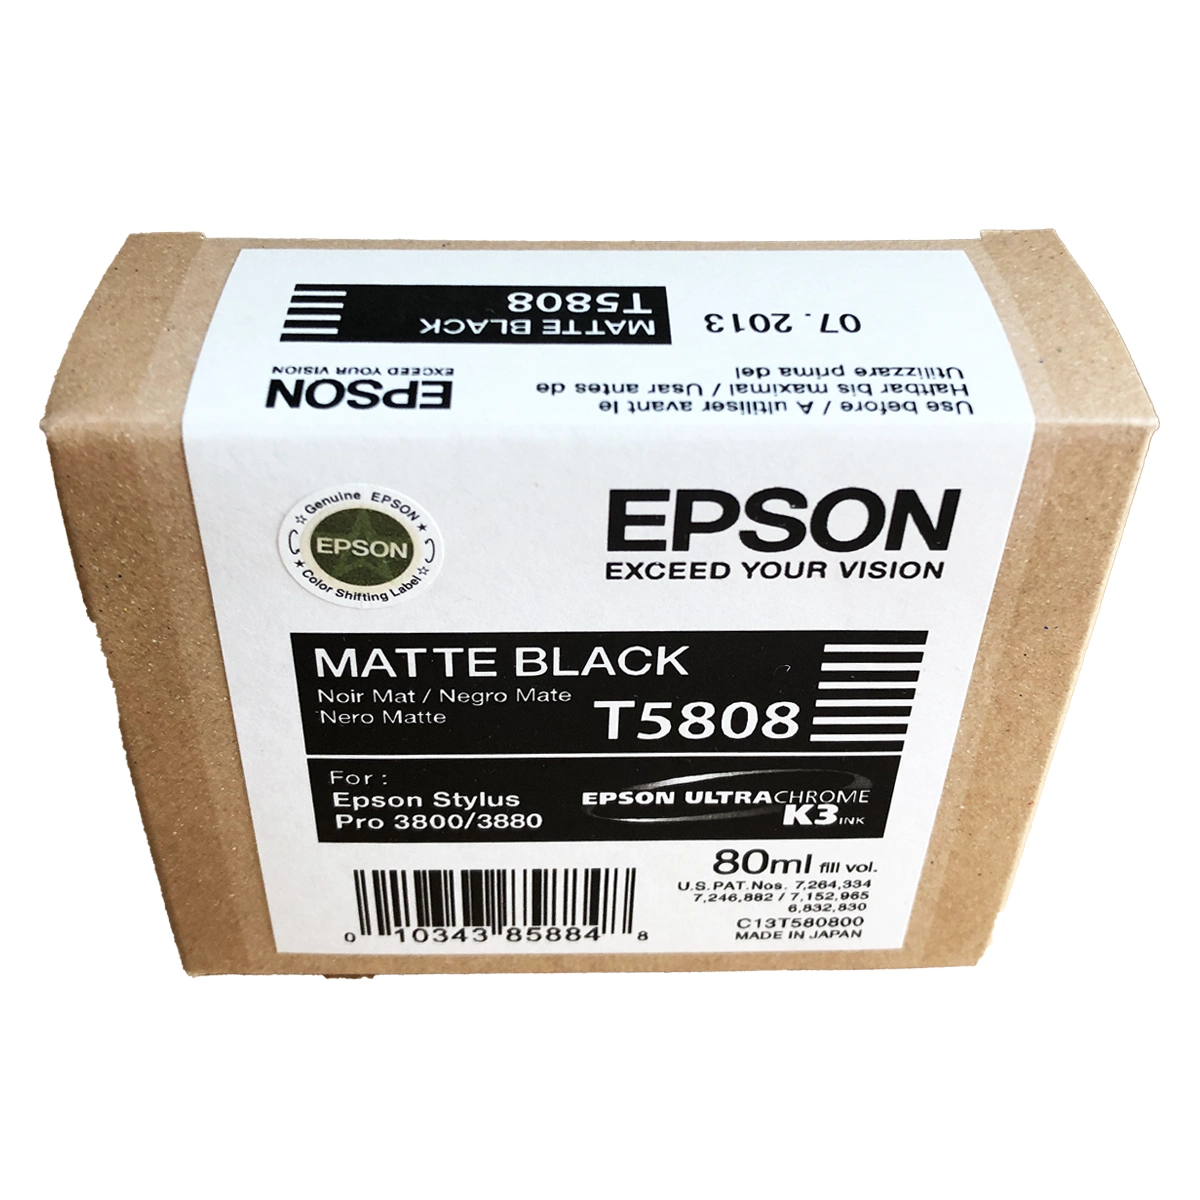 epson stylus photo 3800 3880 matte black ink cartridge new in box